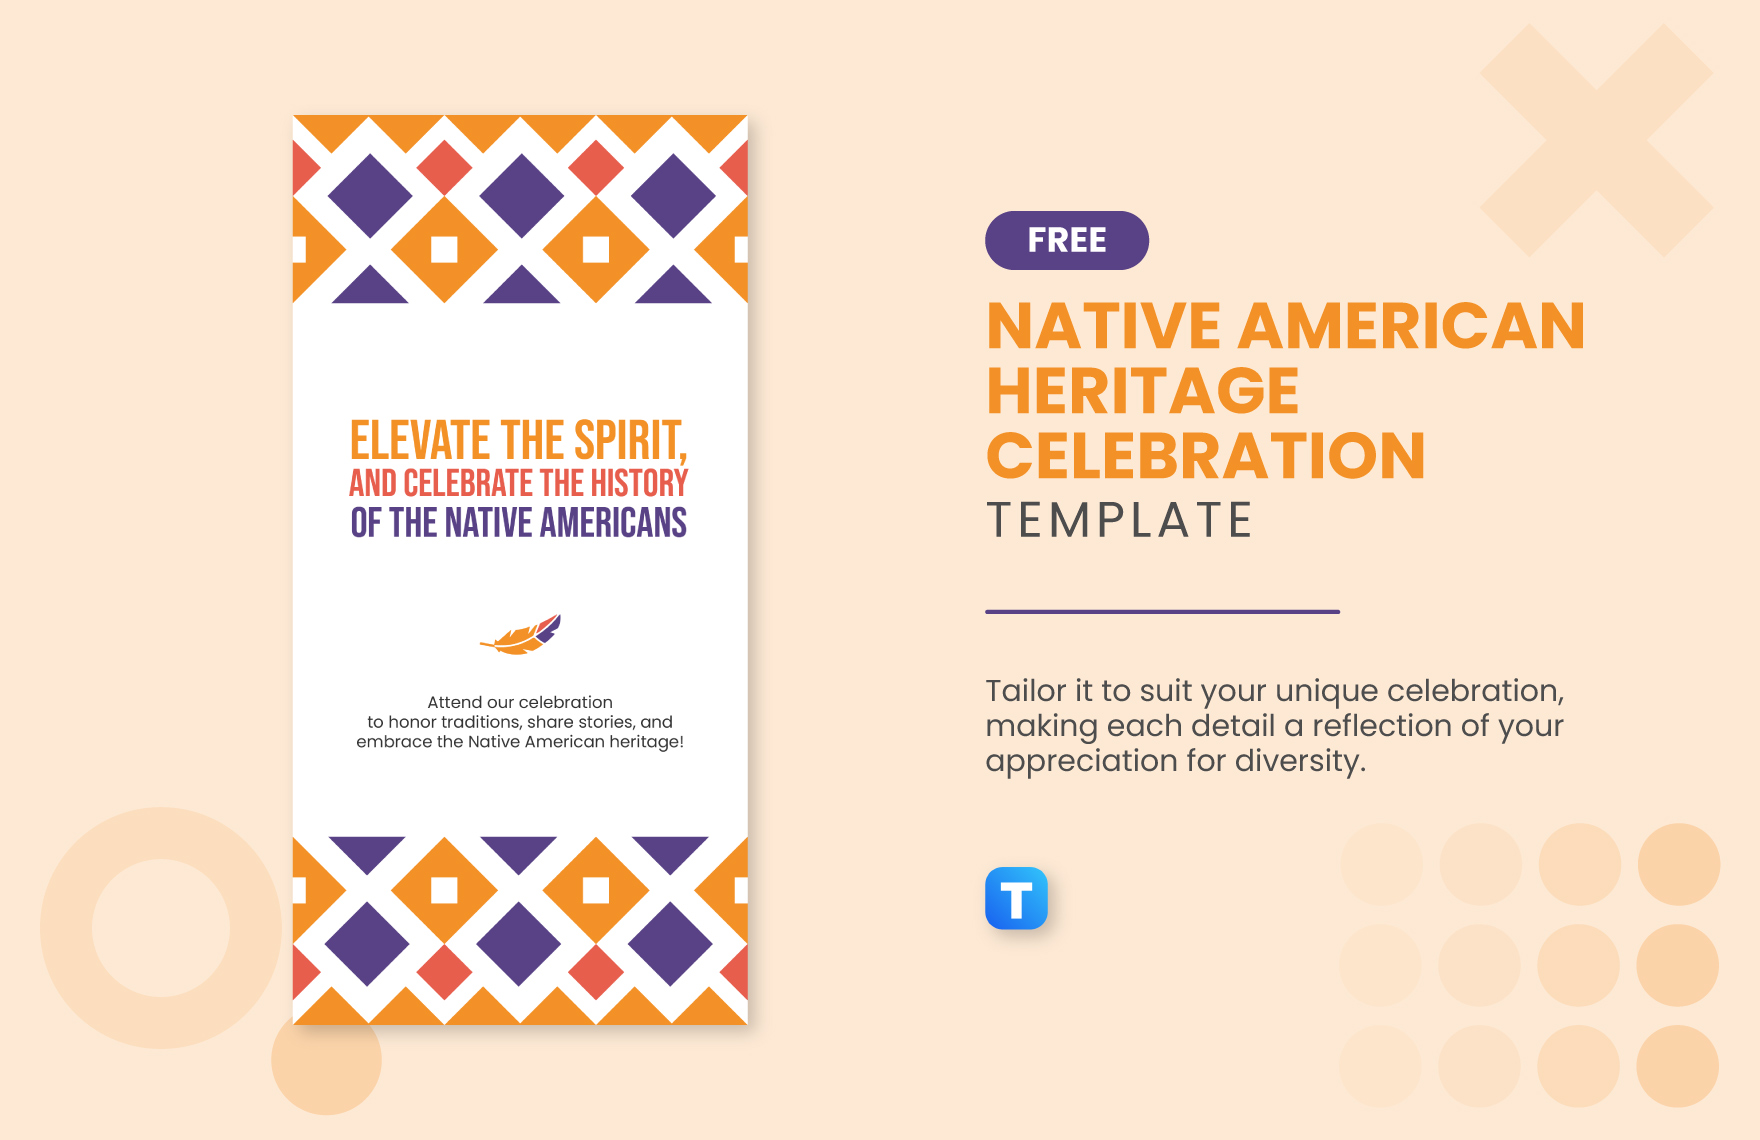 Free Native American Heritage Celebration Template